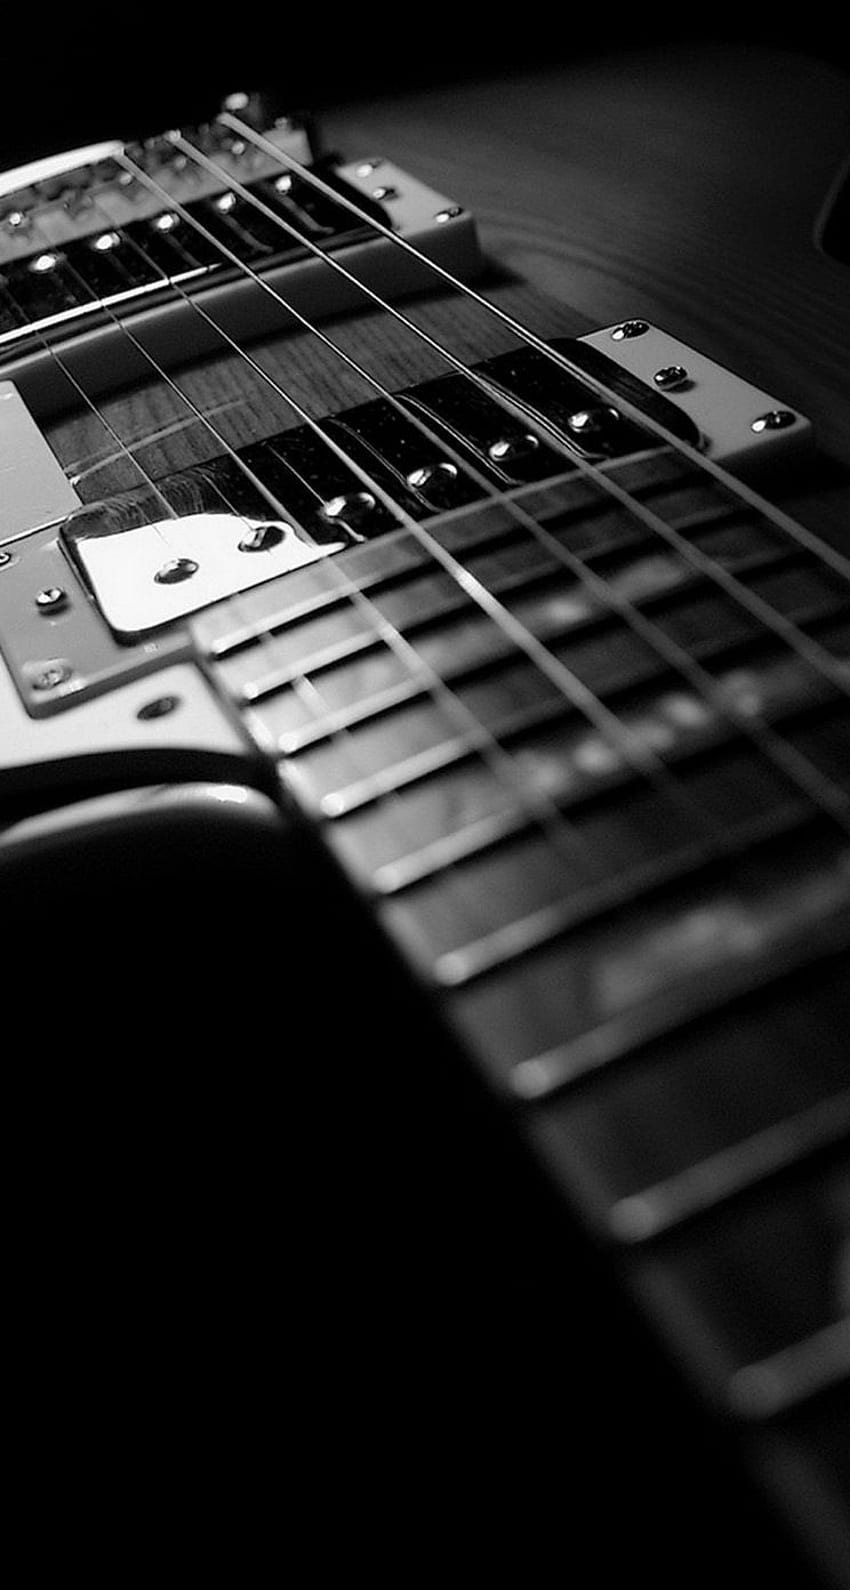 iPhone Gibson Guitar Black and White, iPhone Gitar Keren wallpaper ponsel HD